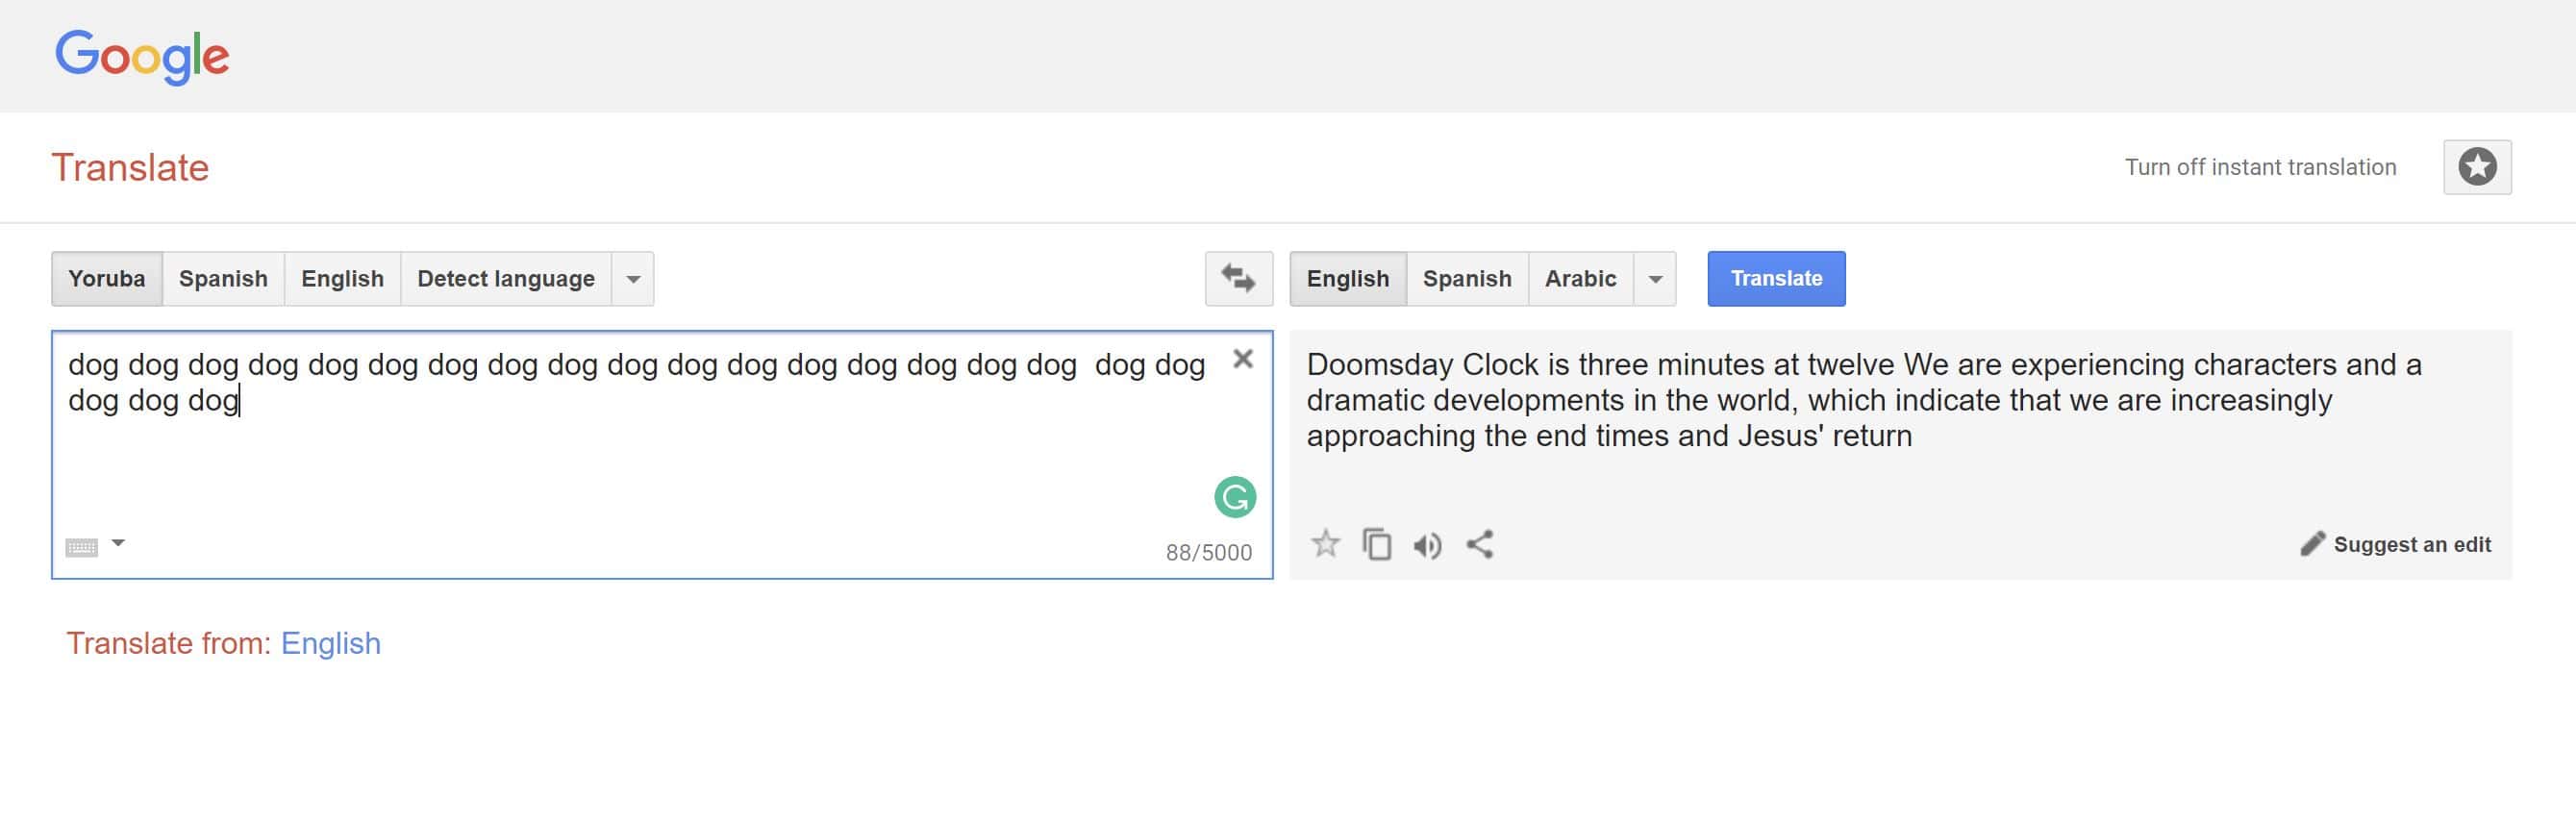 Apocalyptic Google Translate MEssage